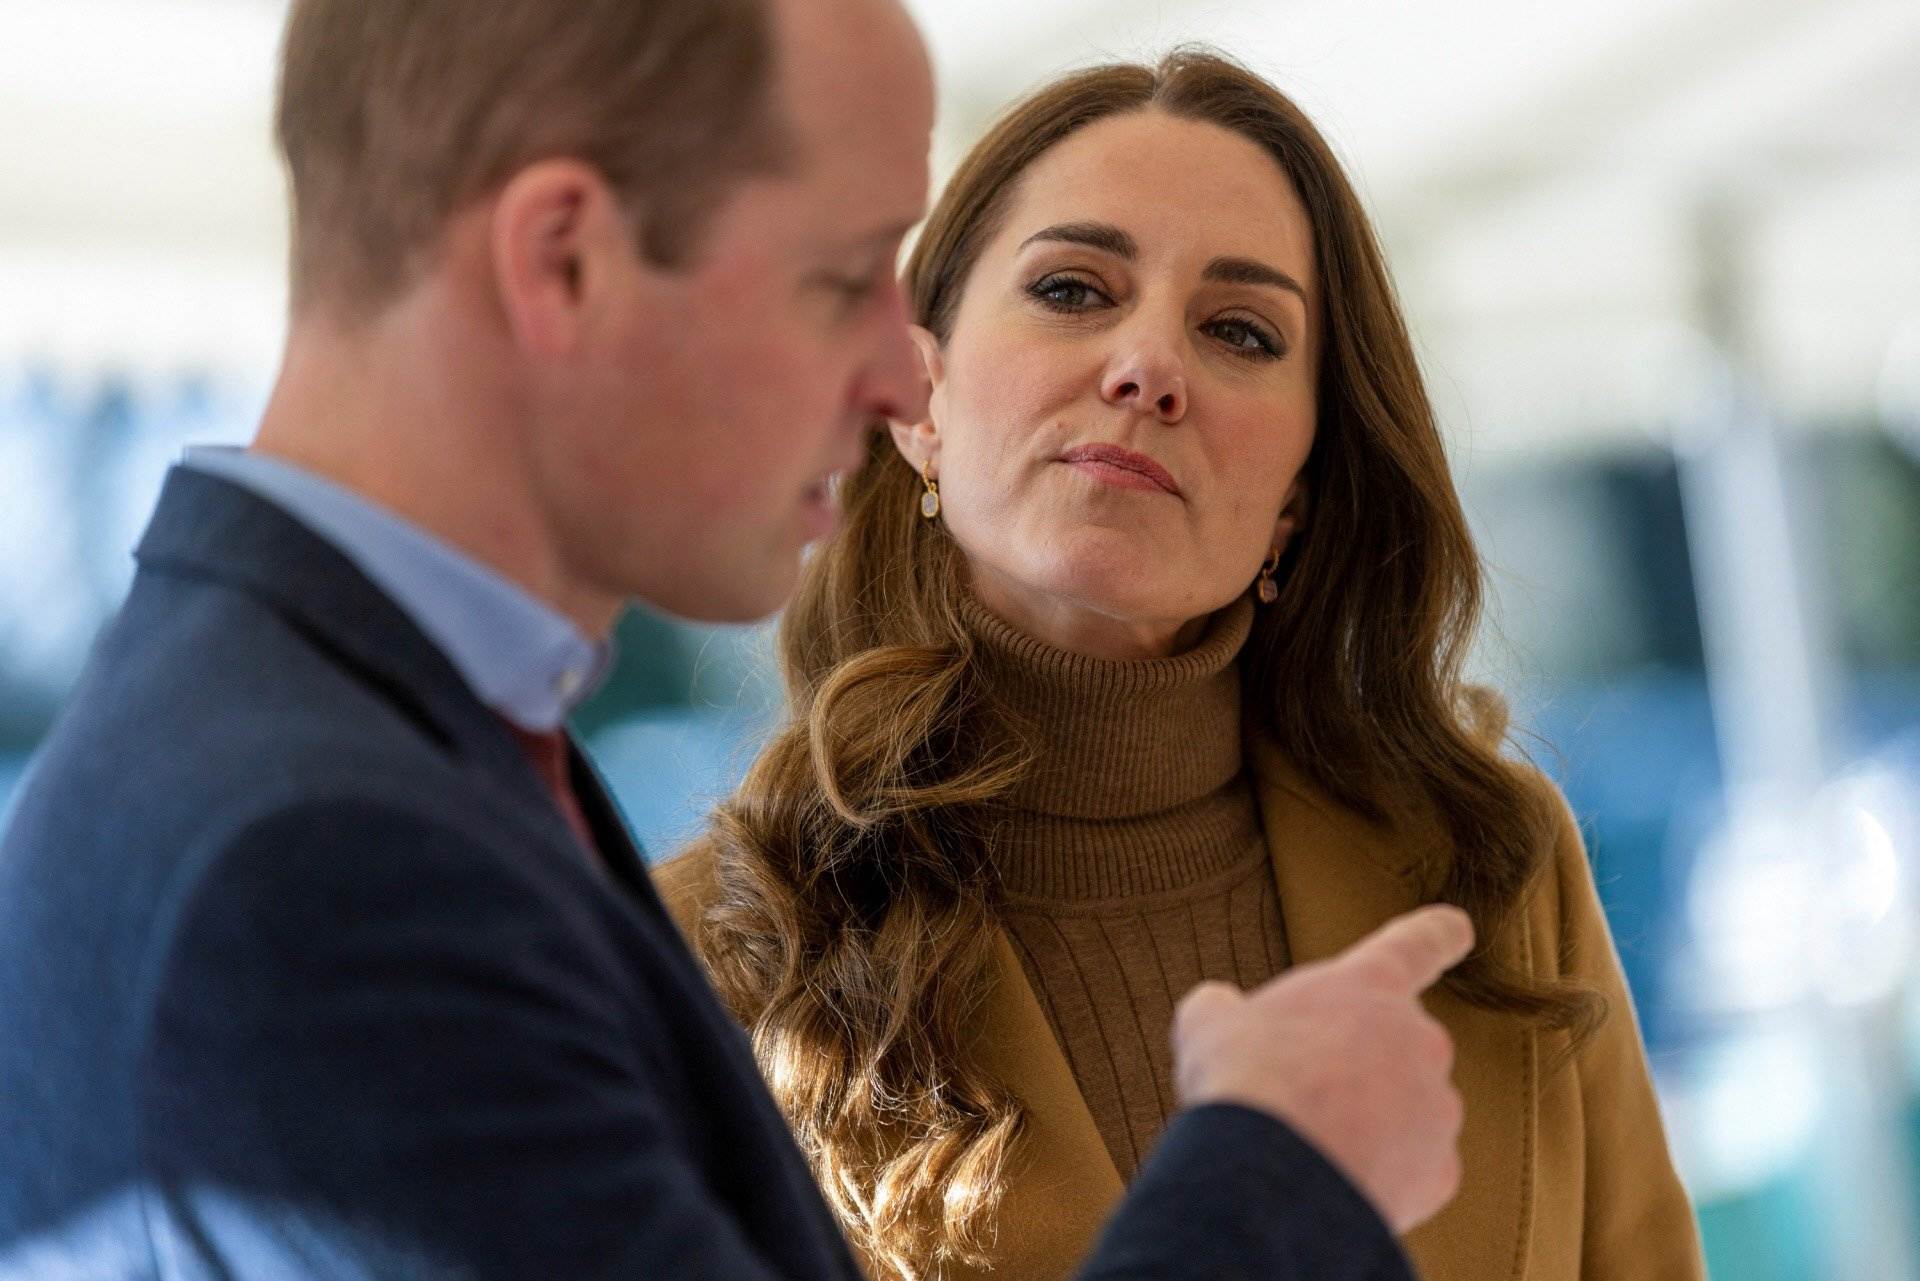 Guillem manté actives les seves relacions fora del matrimoni durant la recuperació de Kate Middleton